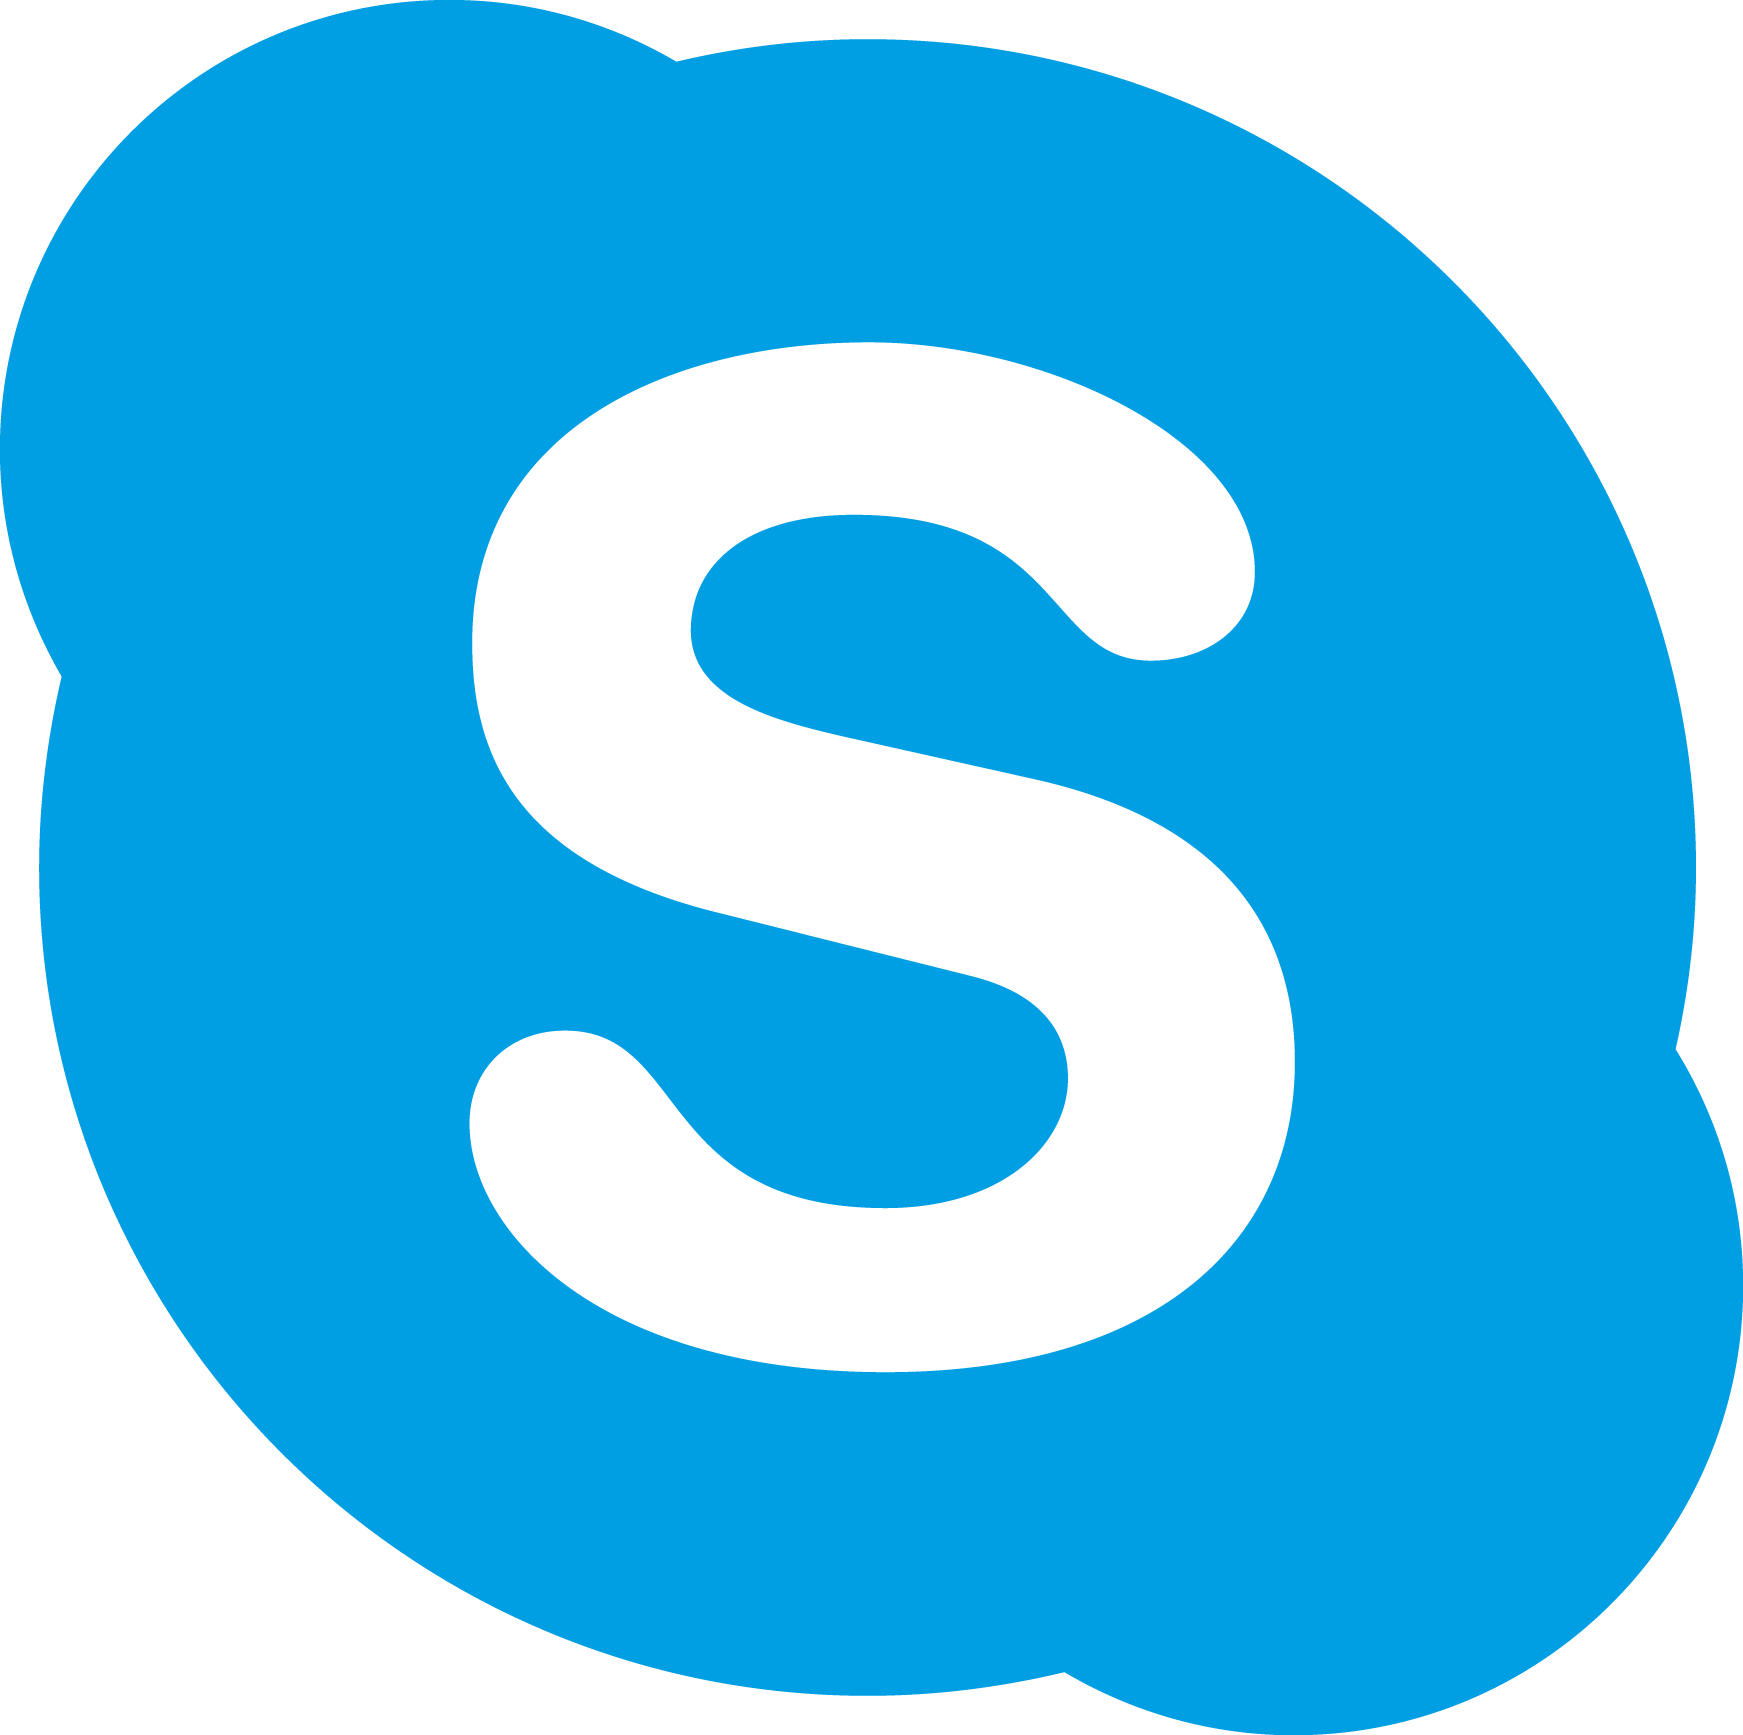 Skype Logo Transparent PNG, Skype icon, Free images Download - Free ...
